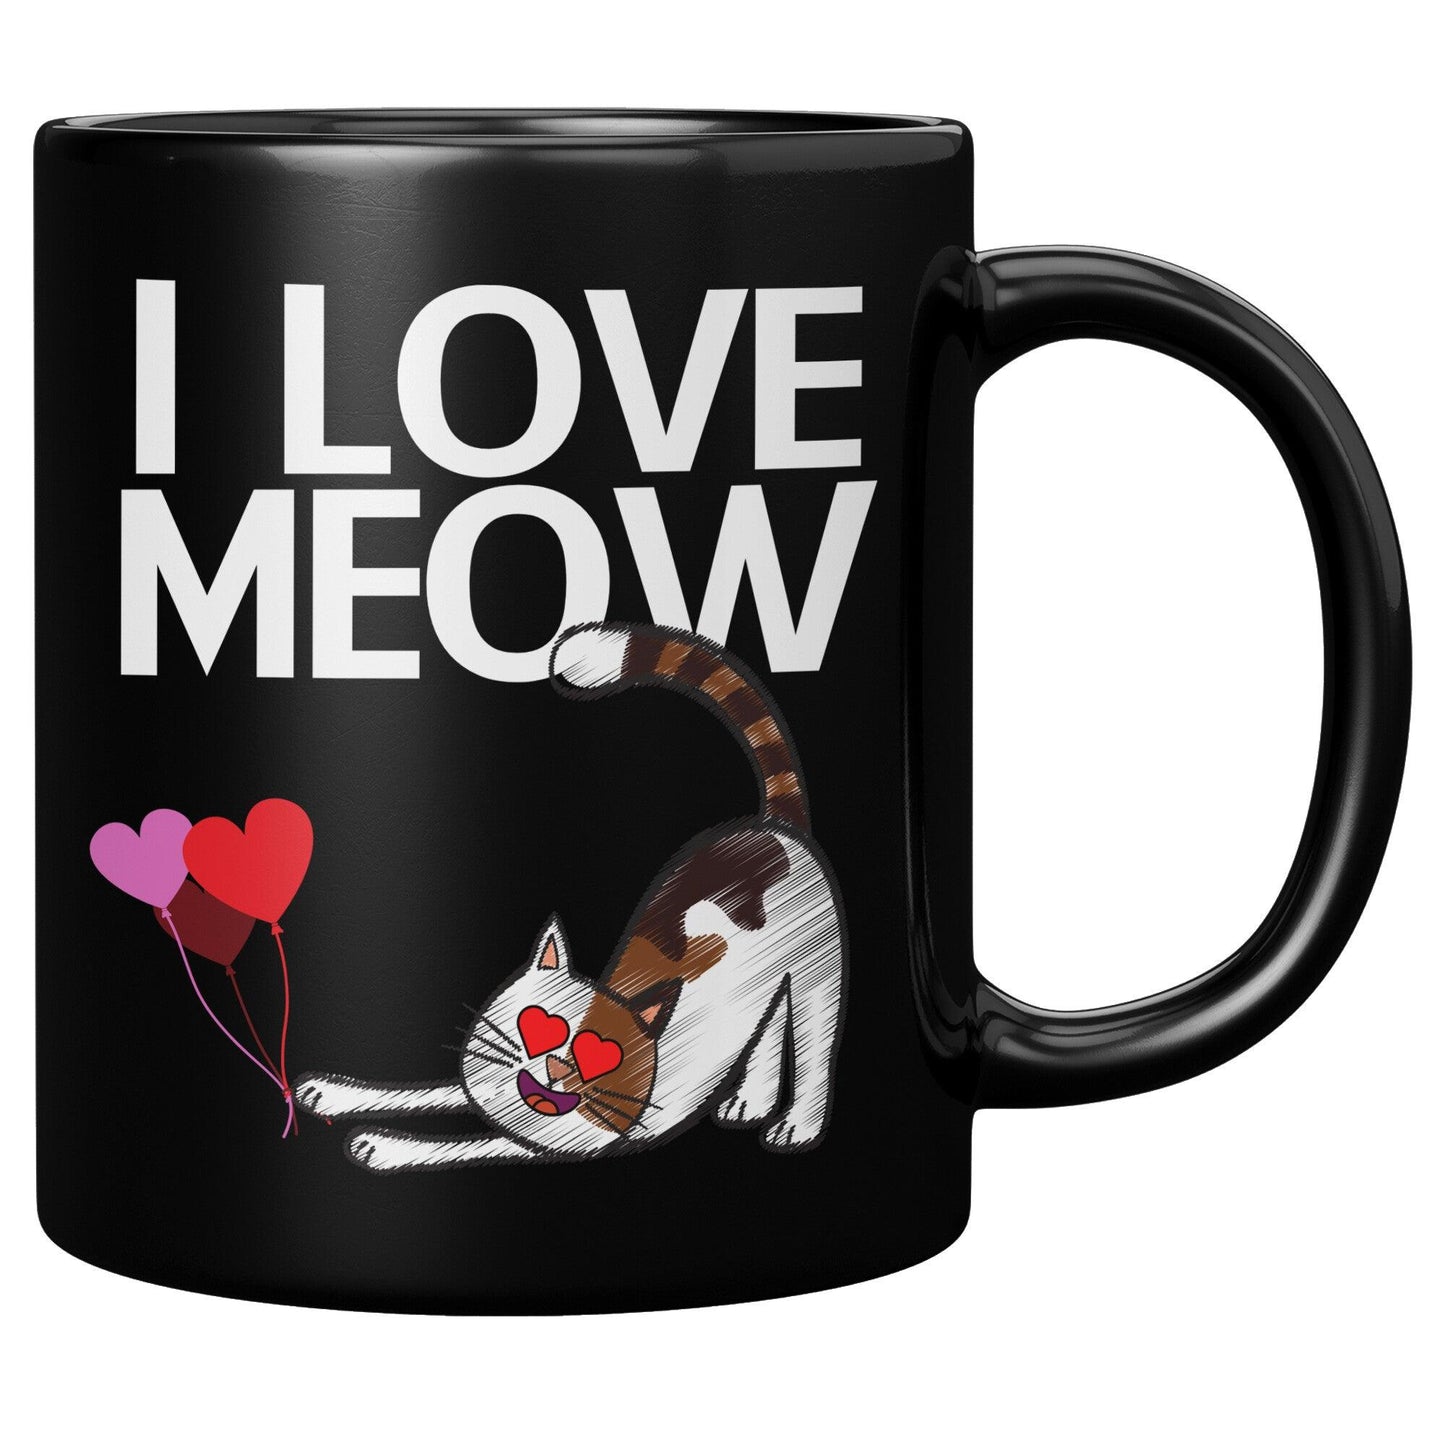 I Love Meow Black Mug - TheGivenGet